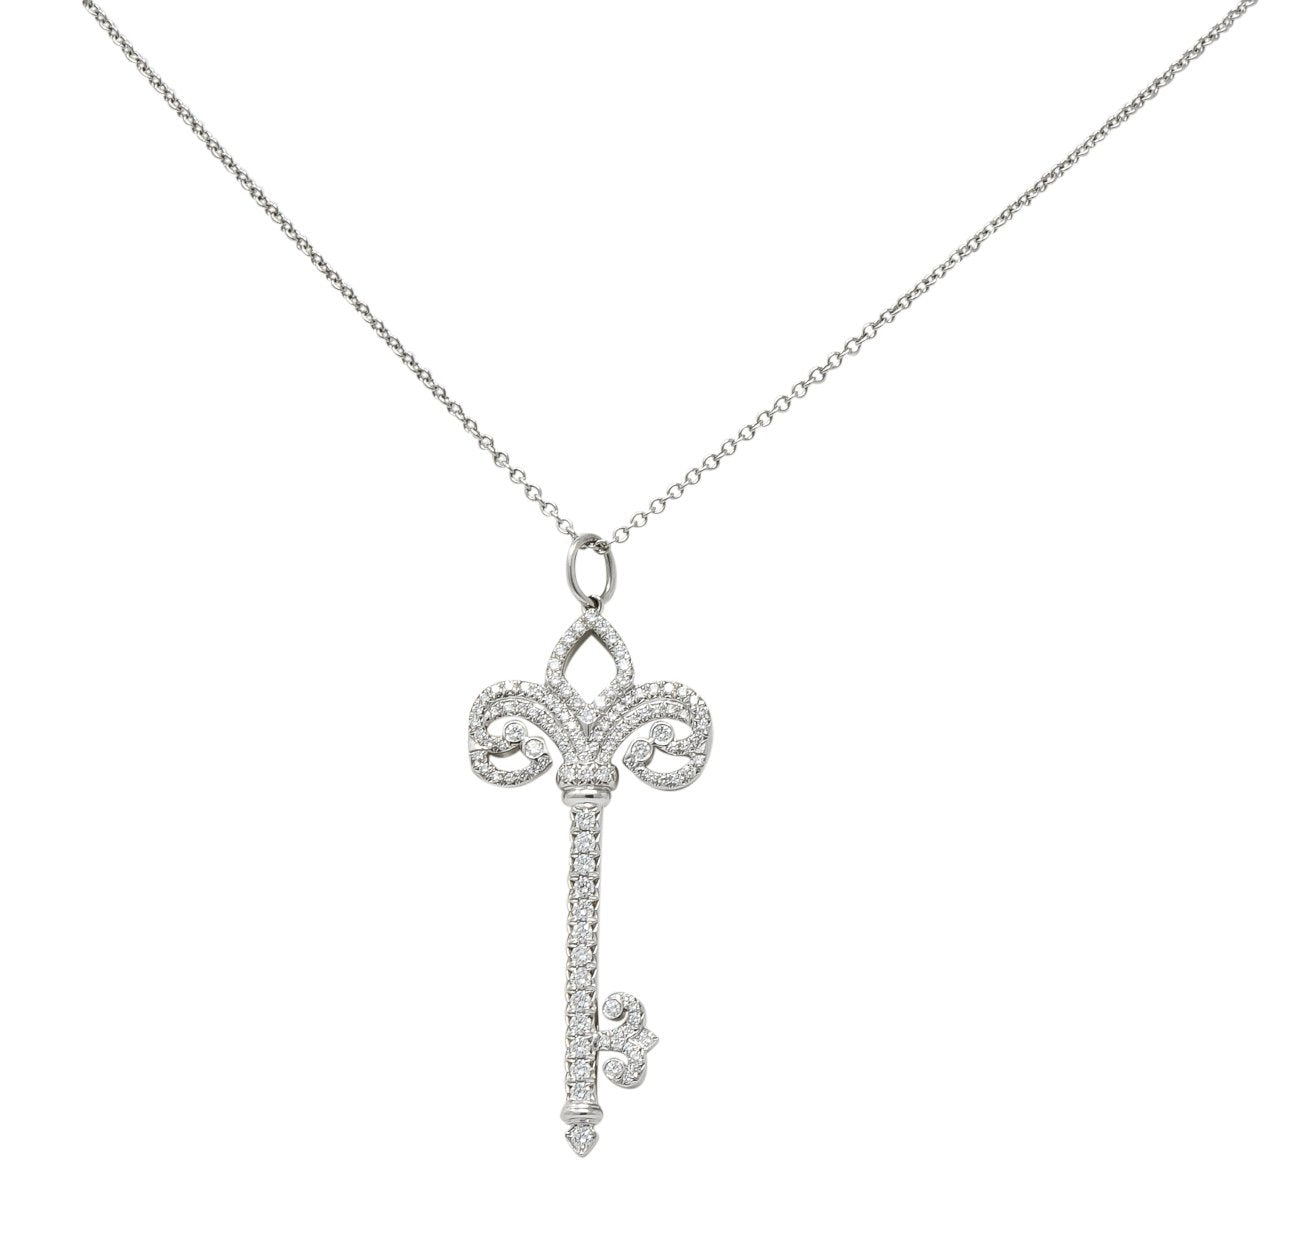 Replica Tiffany Keys Fleur De Lis Key Pendant Women'S Full Diamond